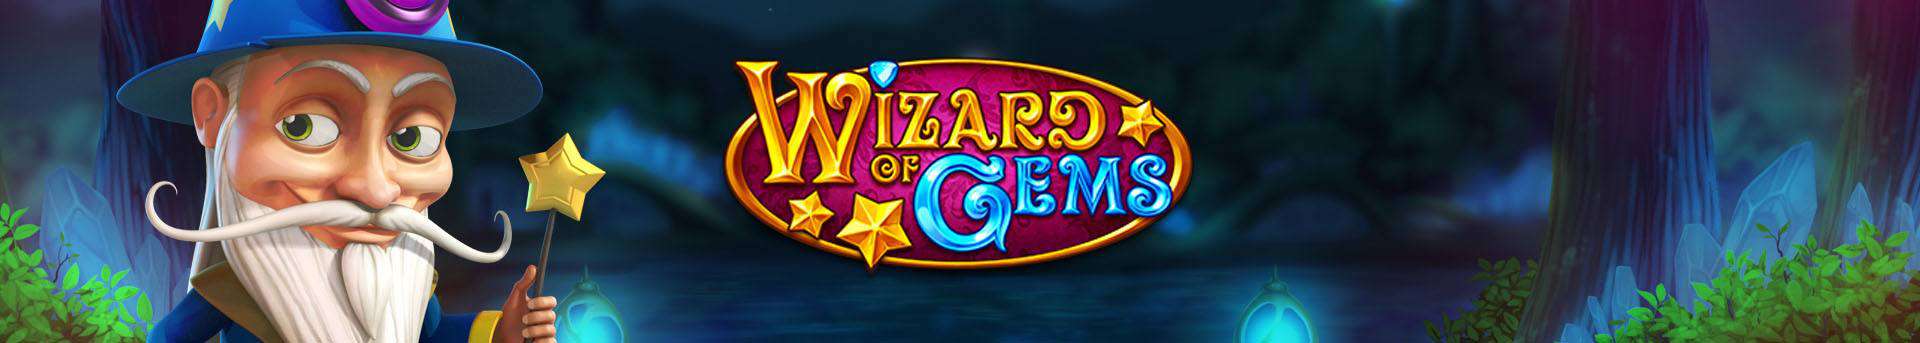 Wizard of Gems automat